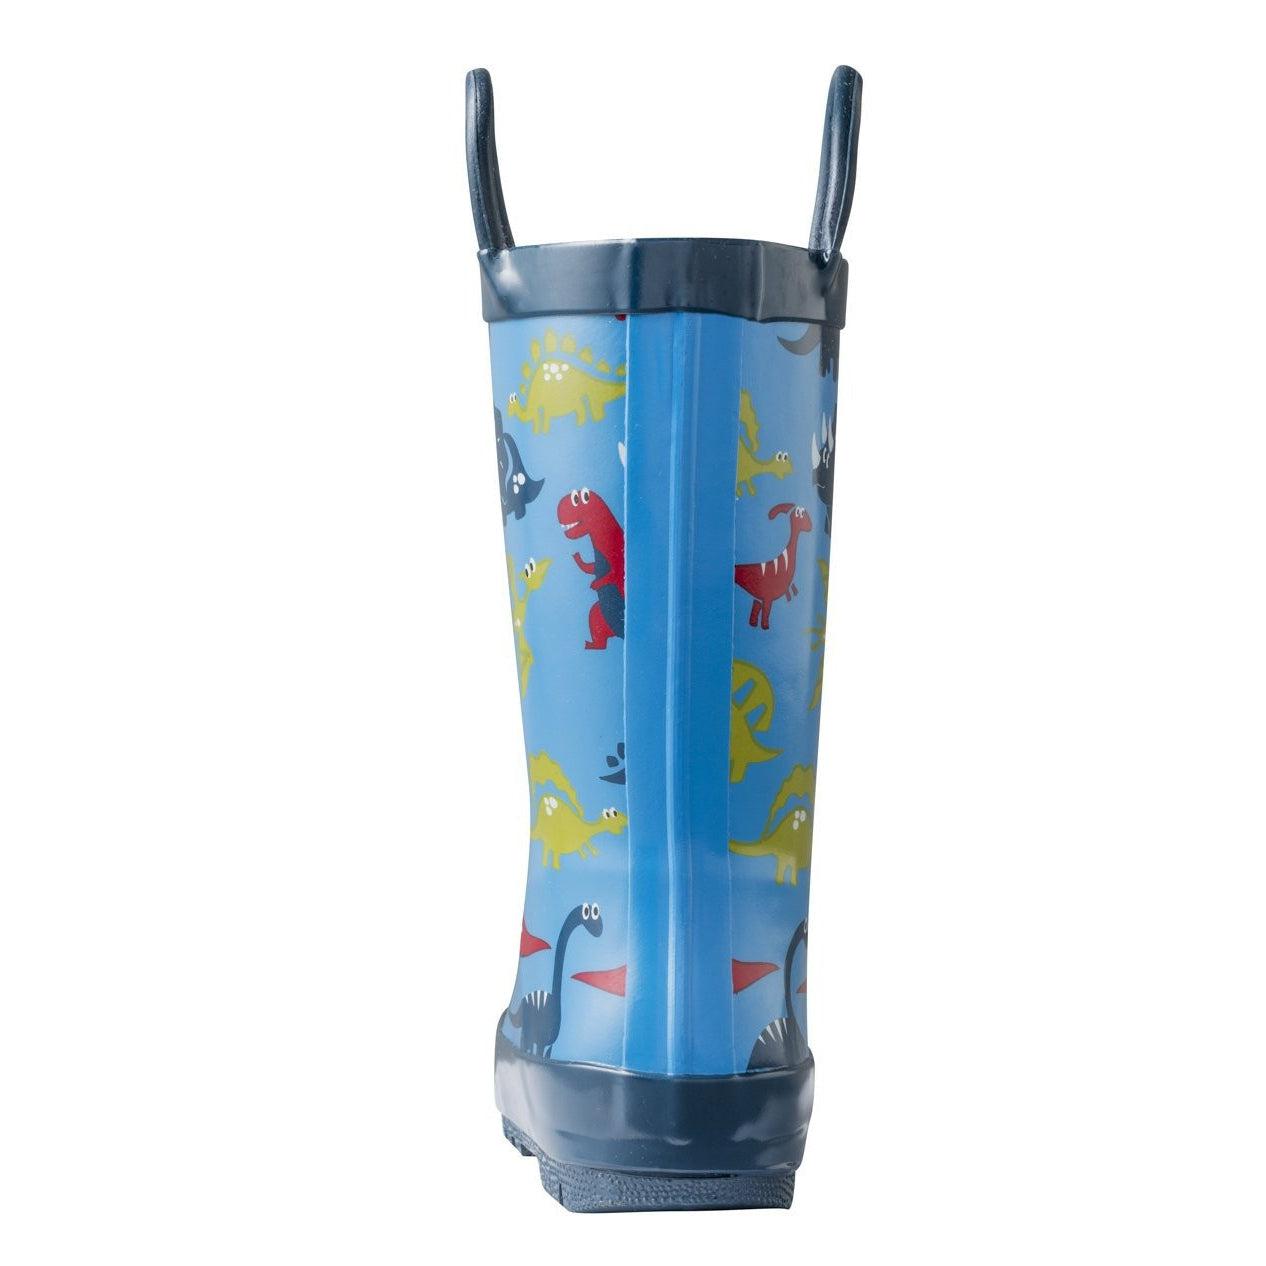 OAKI - Blue Dinosaurs Loop Handle Rubber Rain Boots